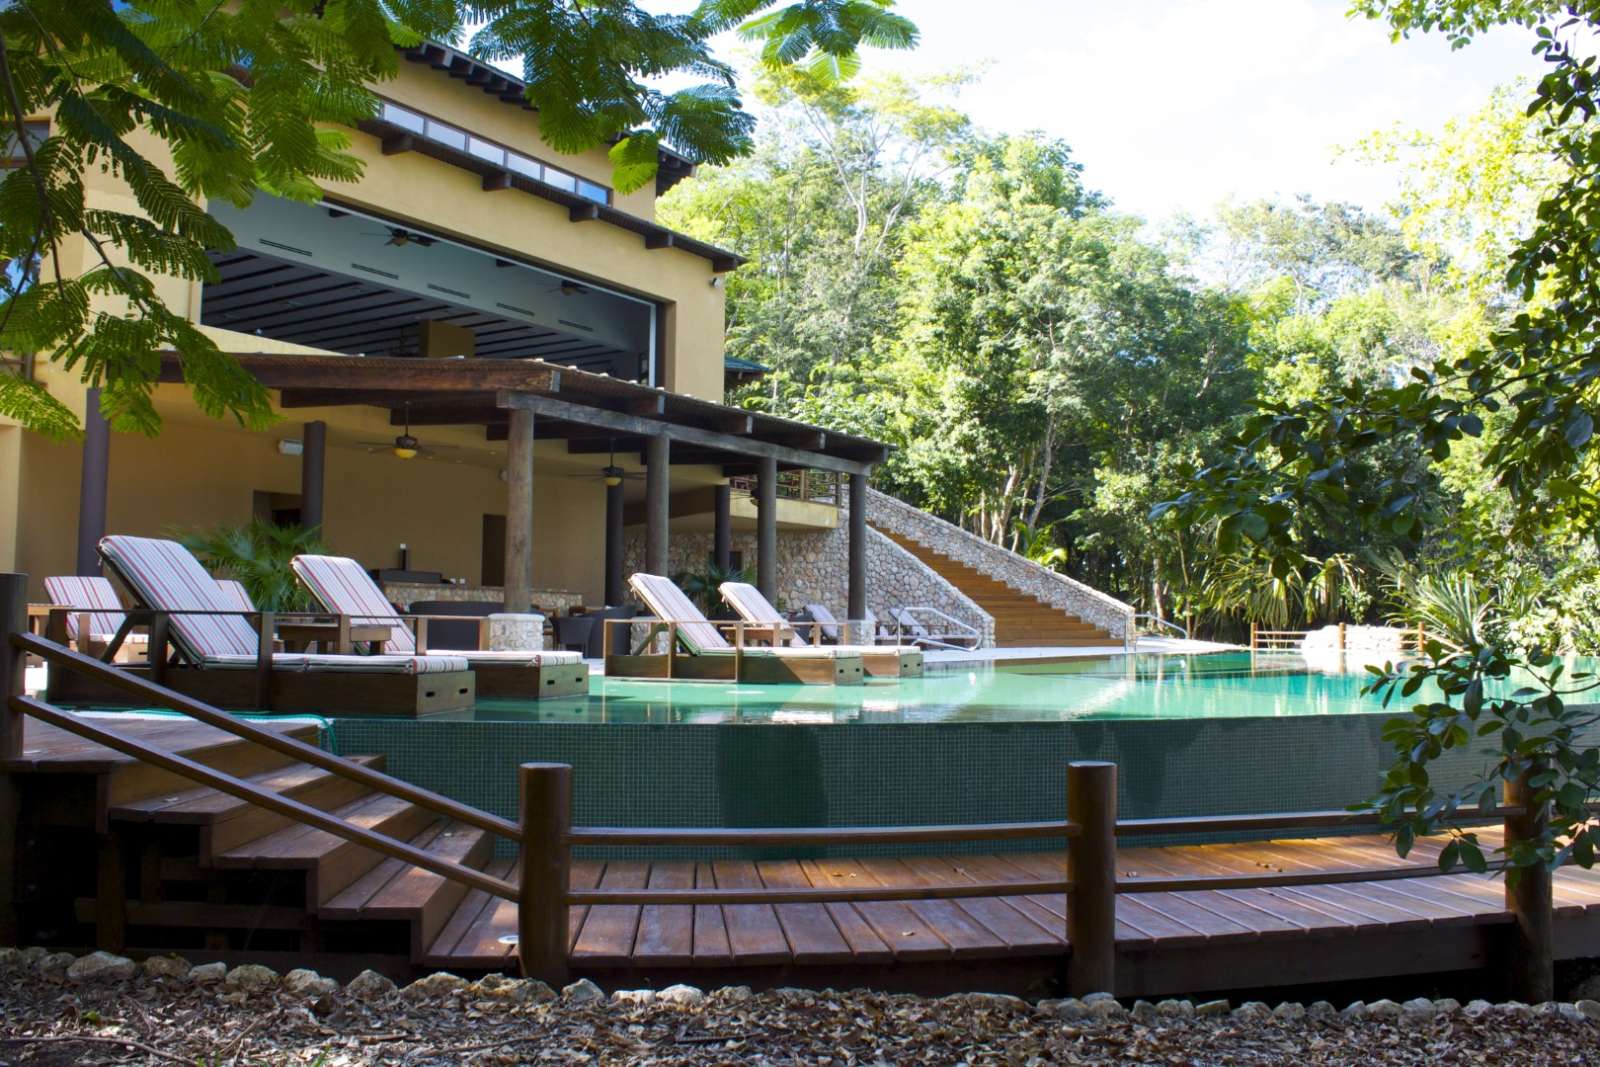 Pool at Hotel Las Lagunas, Guatemala